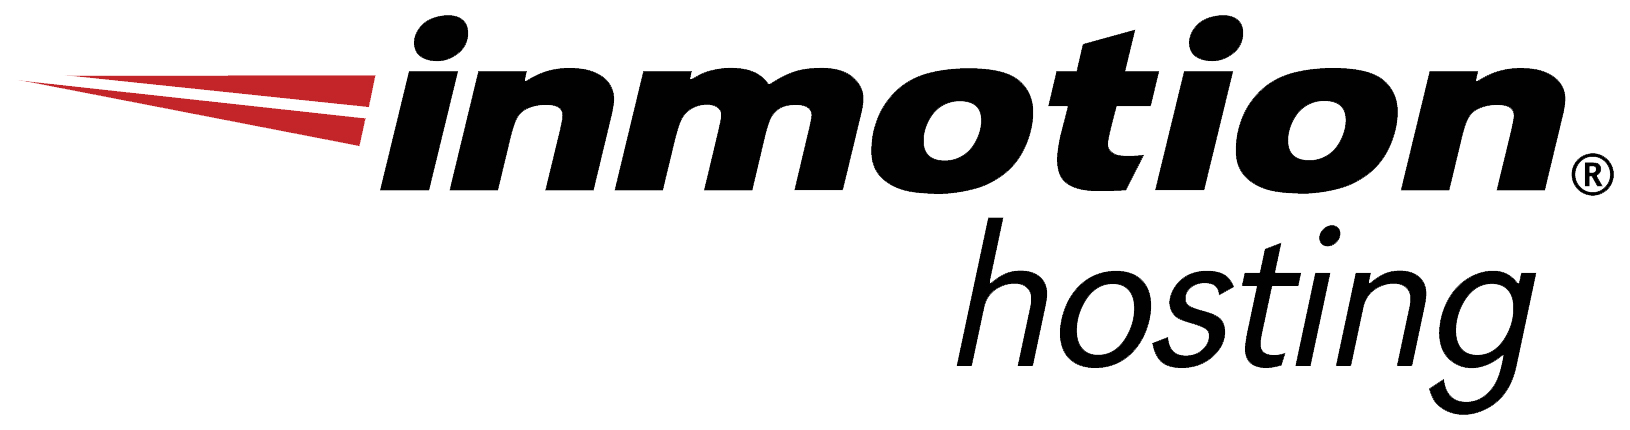 www.envirogreenery.com Logo